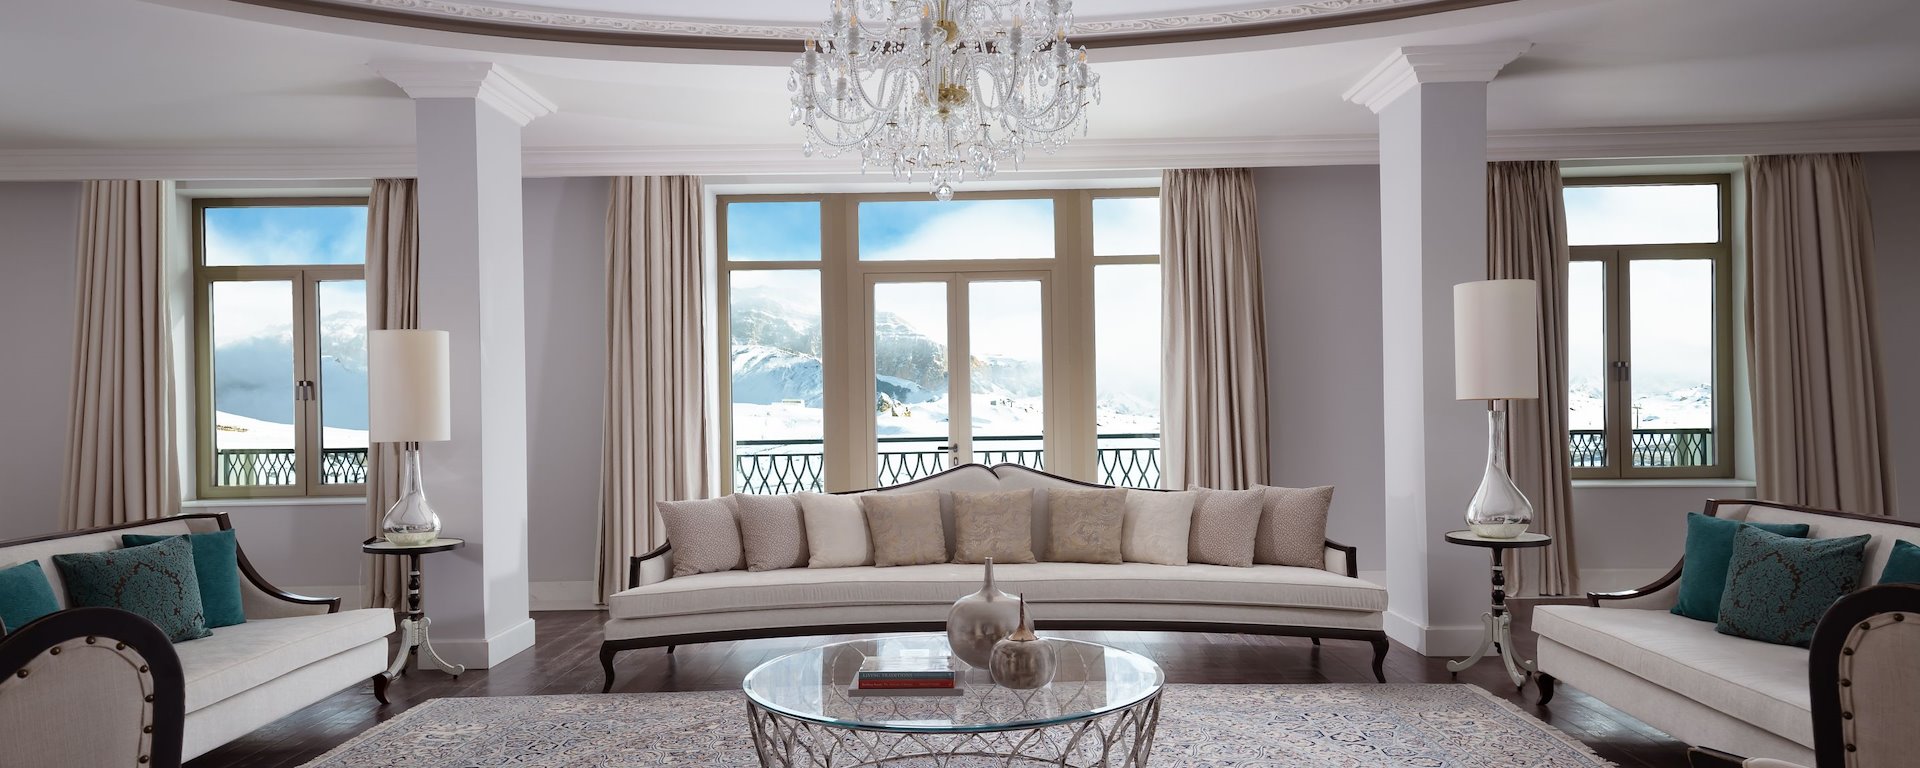 Hotel Azerbaijan Rooms Top